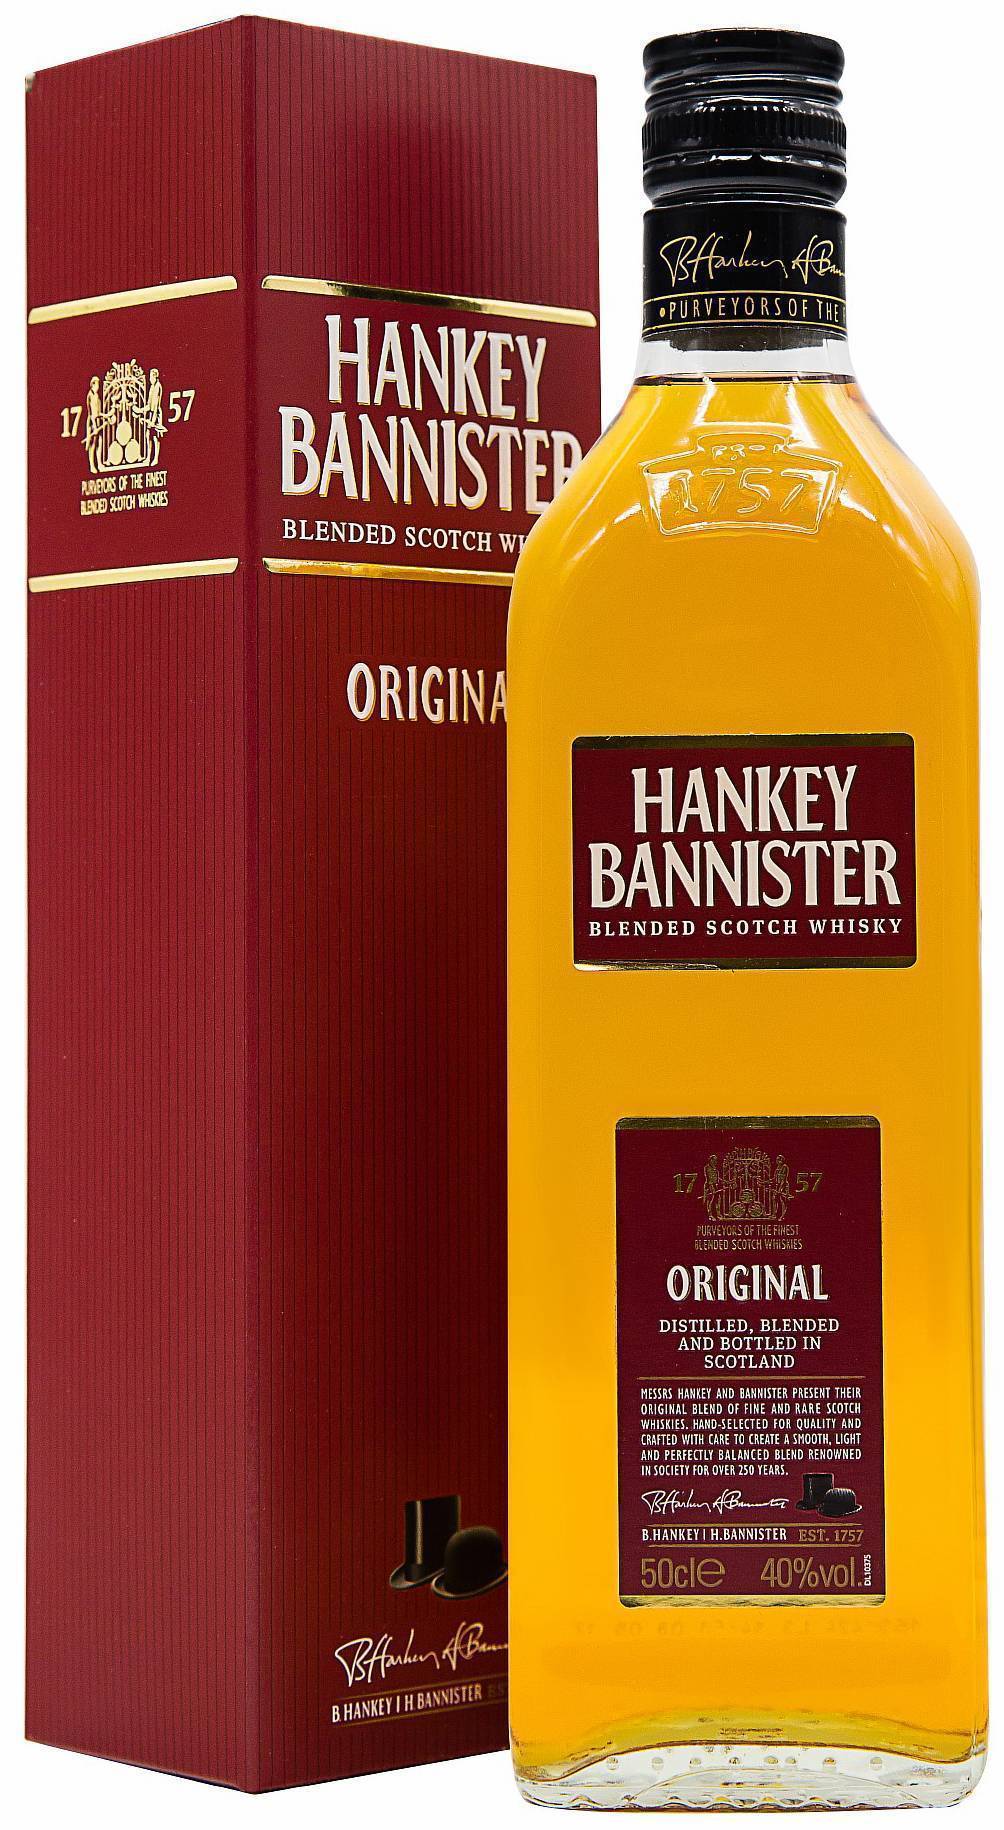 Ханки баннистер. Виски Хенкель Баннистер. Ханки Баннистер виски. Виски Hankey Bannister Original, 4.5 л, подарочная упаковка. Виски Хэнки Бэннистер 3 года.